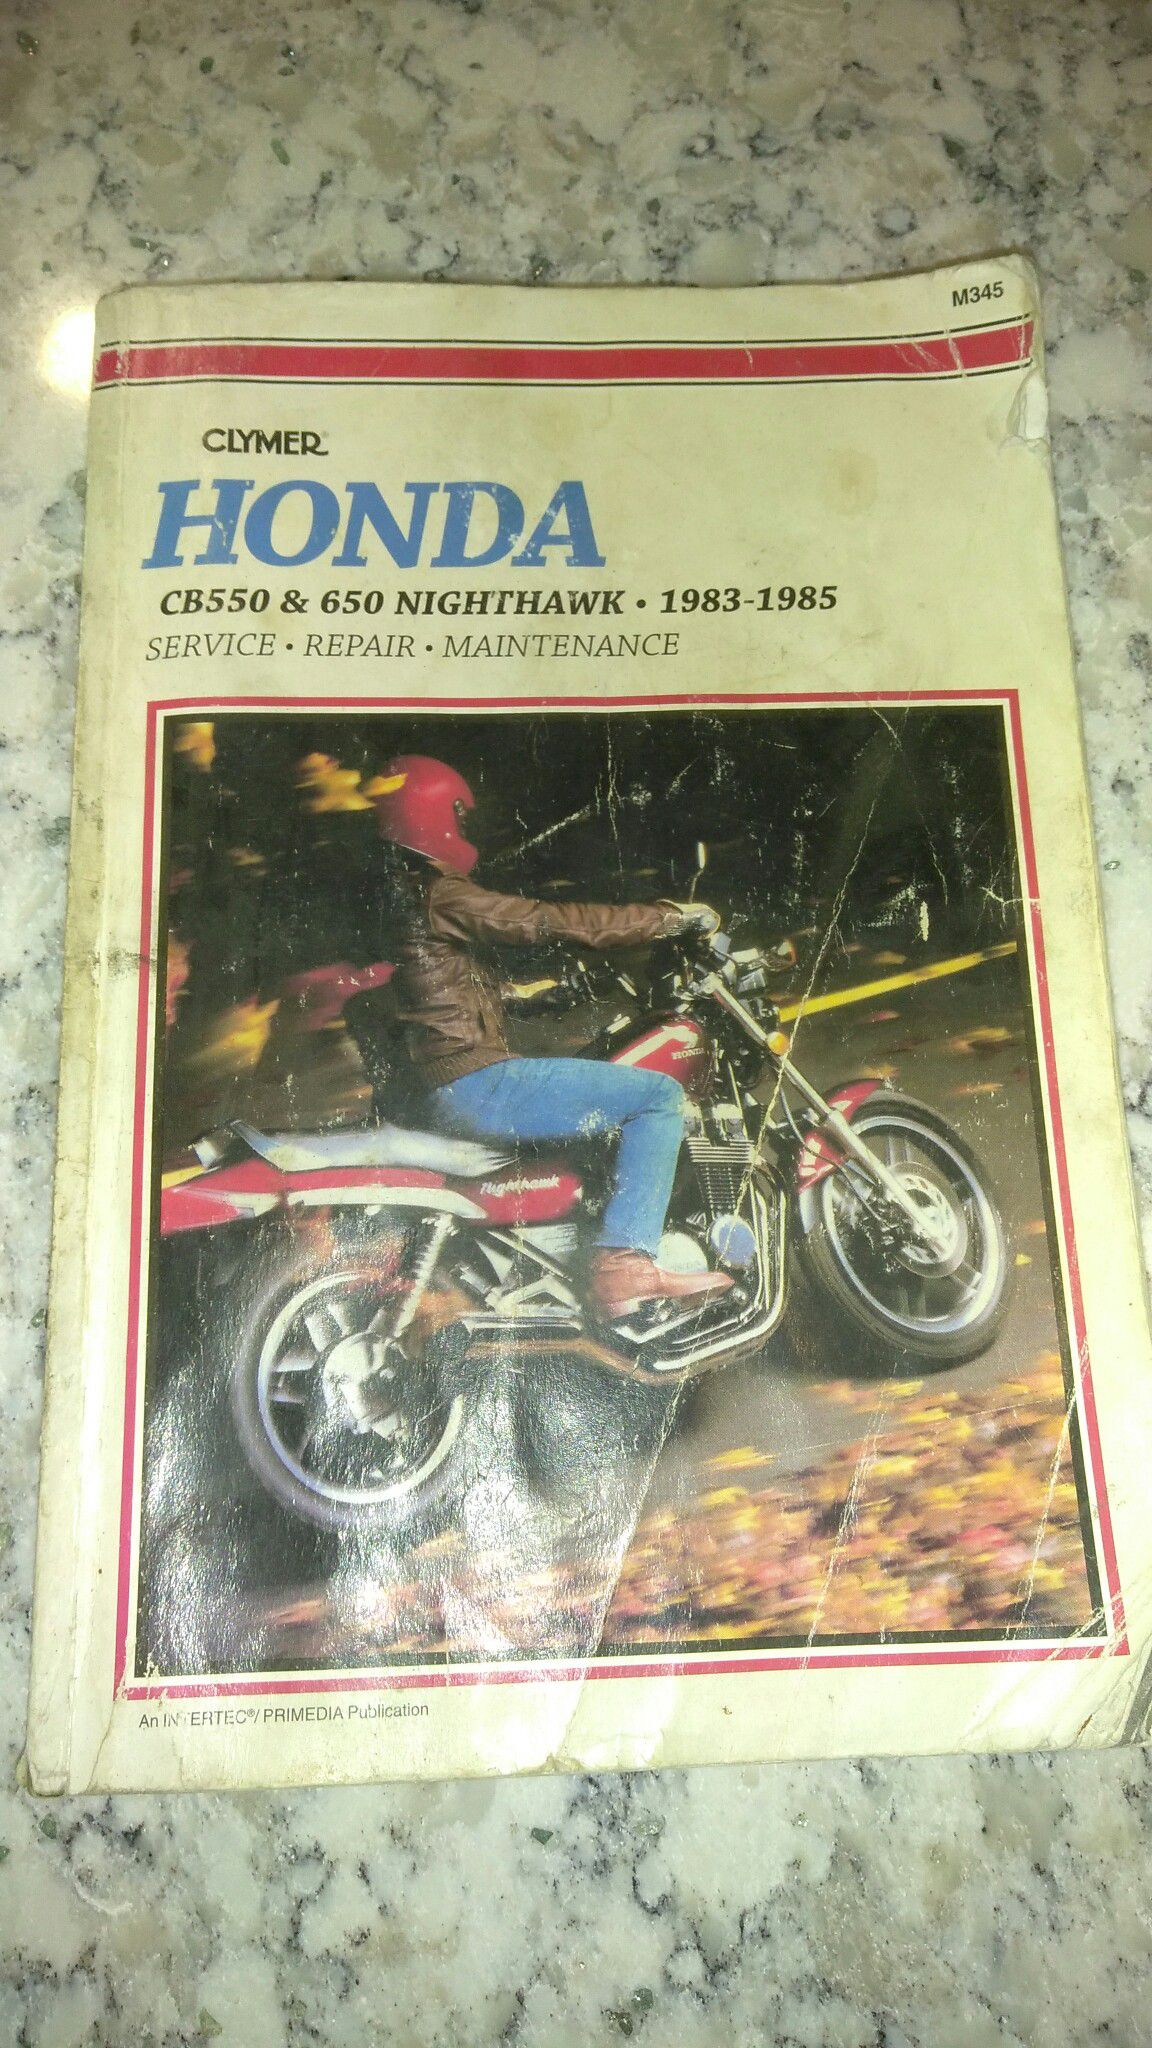 Honda motorcycle's Clymer manual.